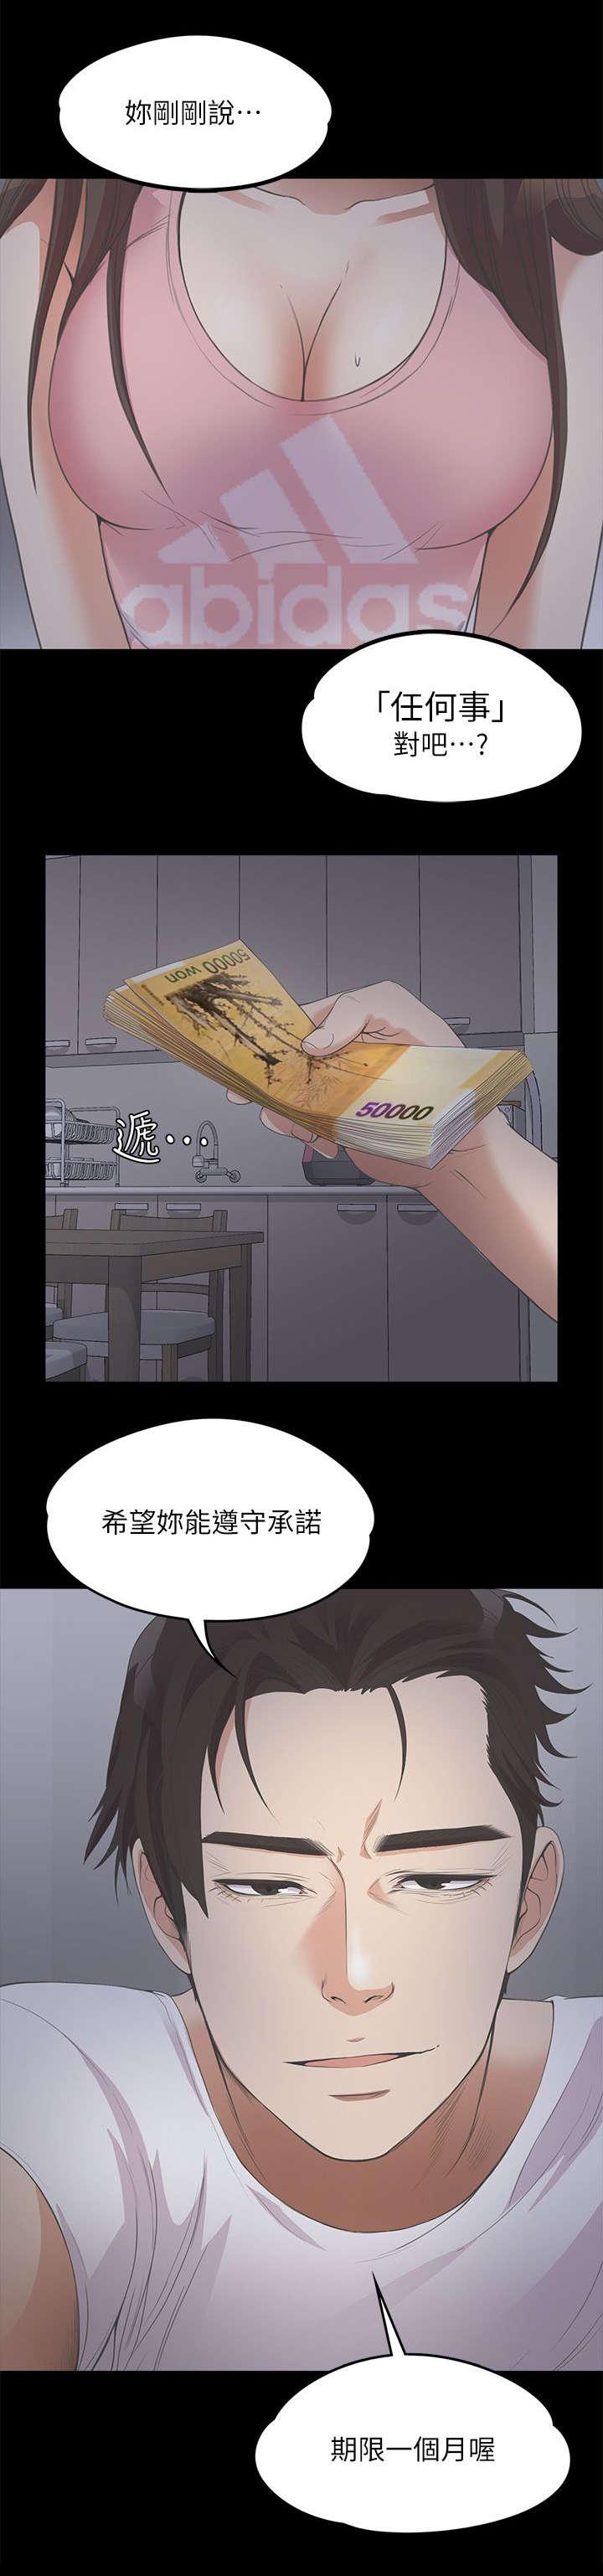 qq飞车漫画-30_期待全彩韩漫标签